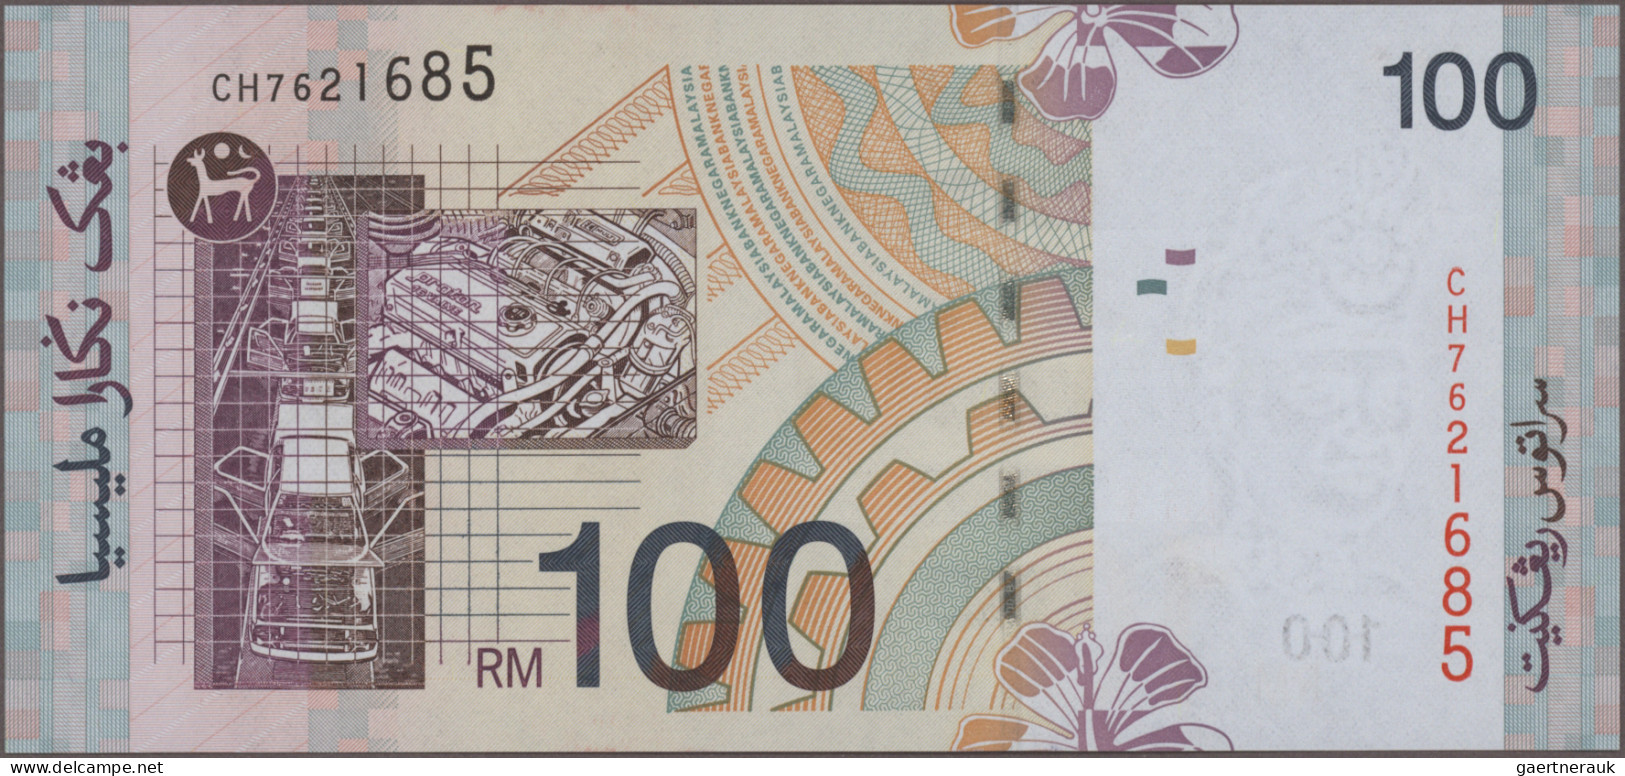 Malaysia: Bank Negara Malaysia, Lot With 7 Banknotes, Series 1999-2011, With 1, - Malaysie